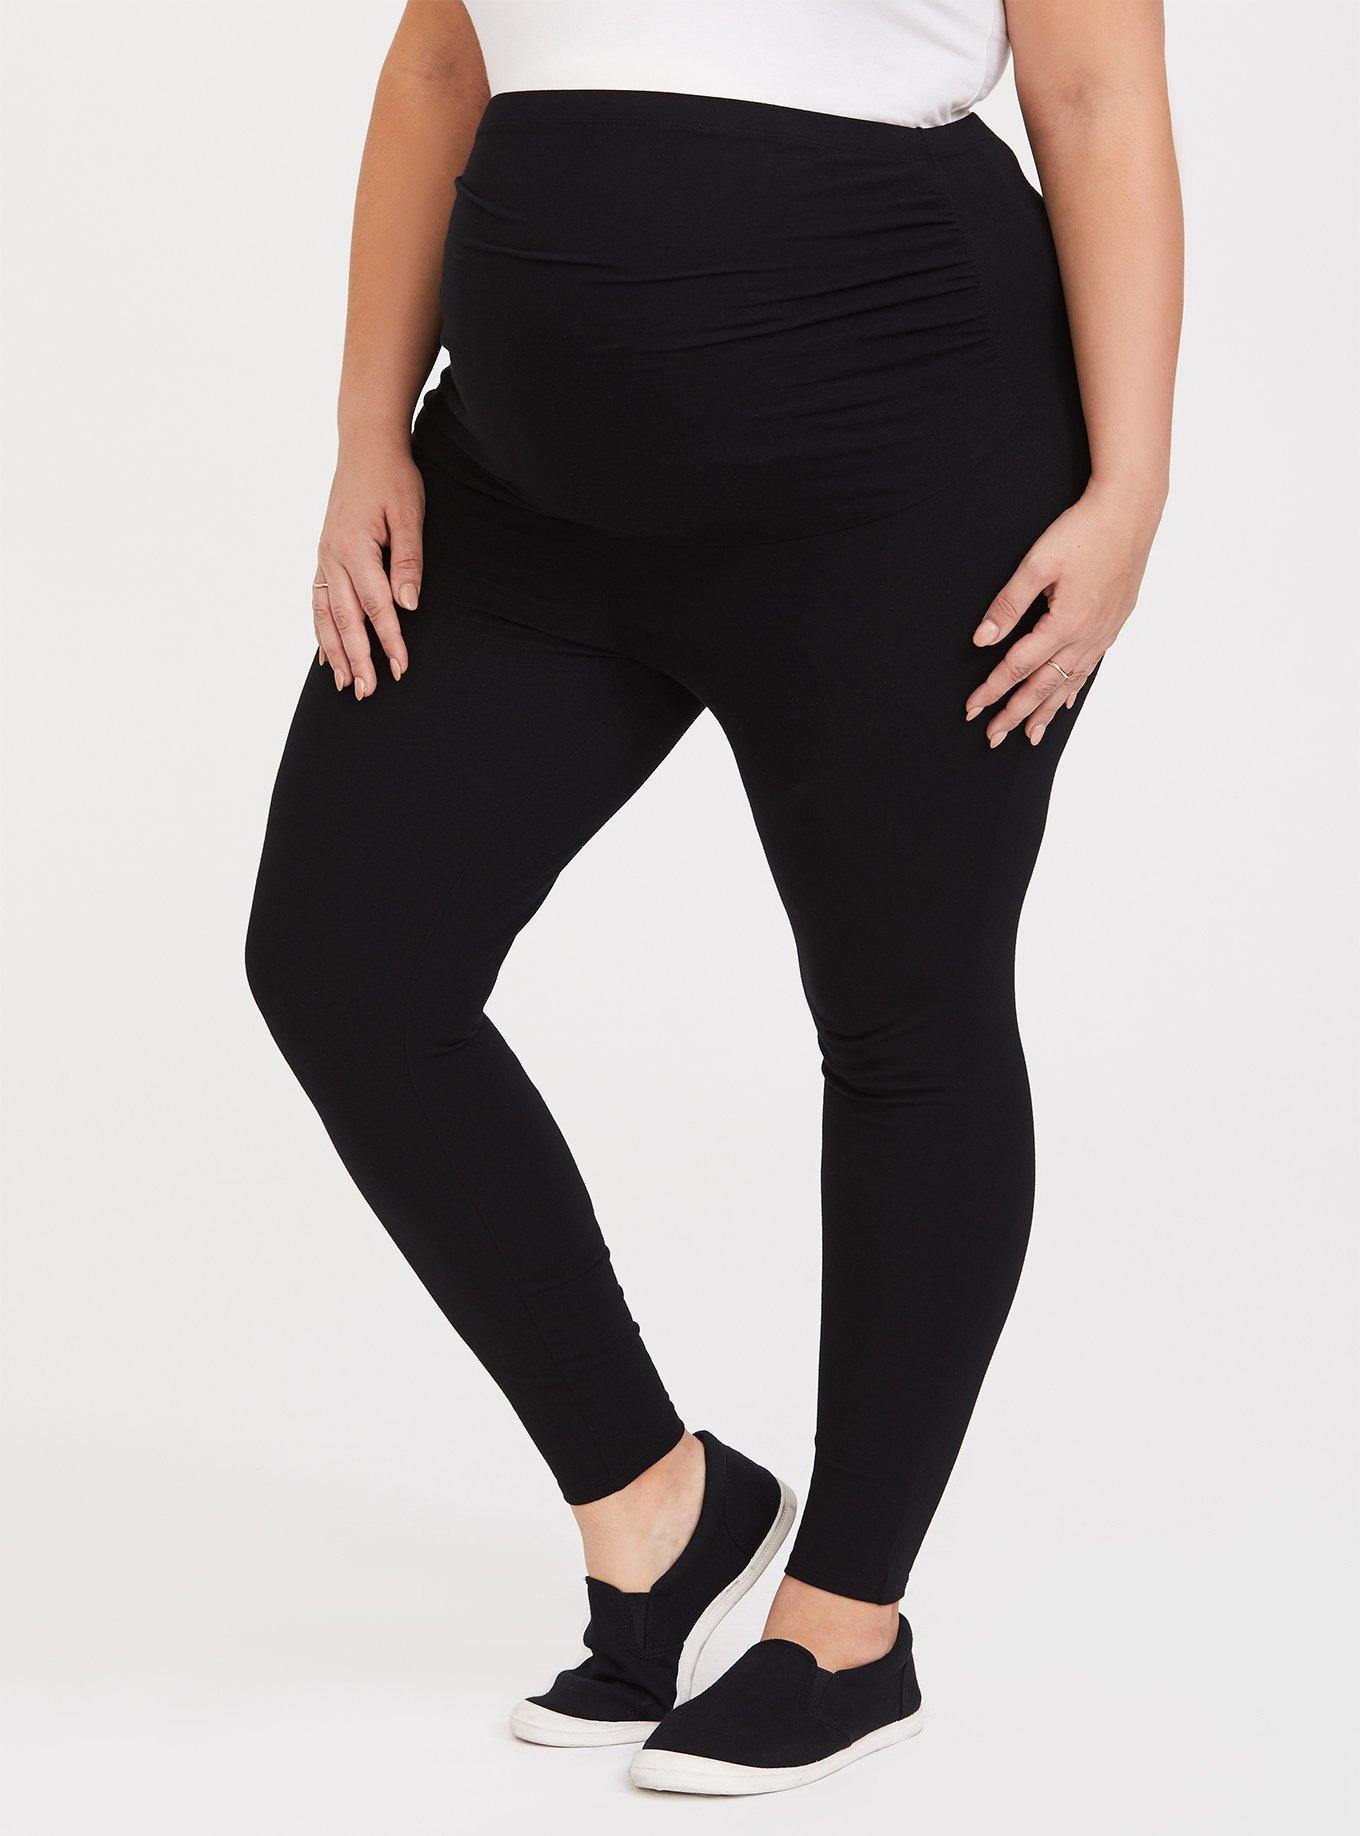 Plus Size Generation X Leggings - Black  Fall maternity outfits, Plus size  leggings, Plus size